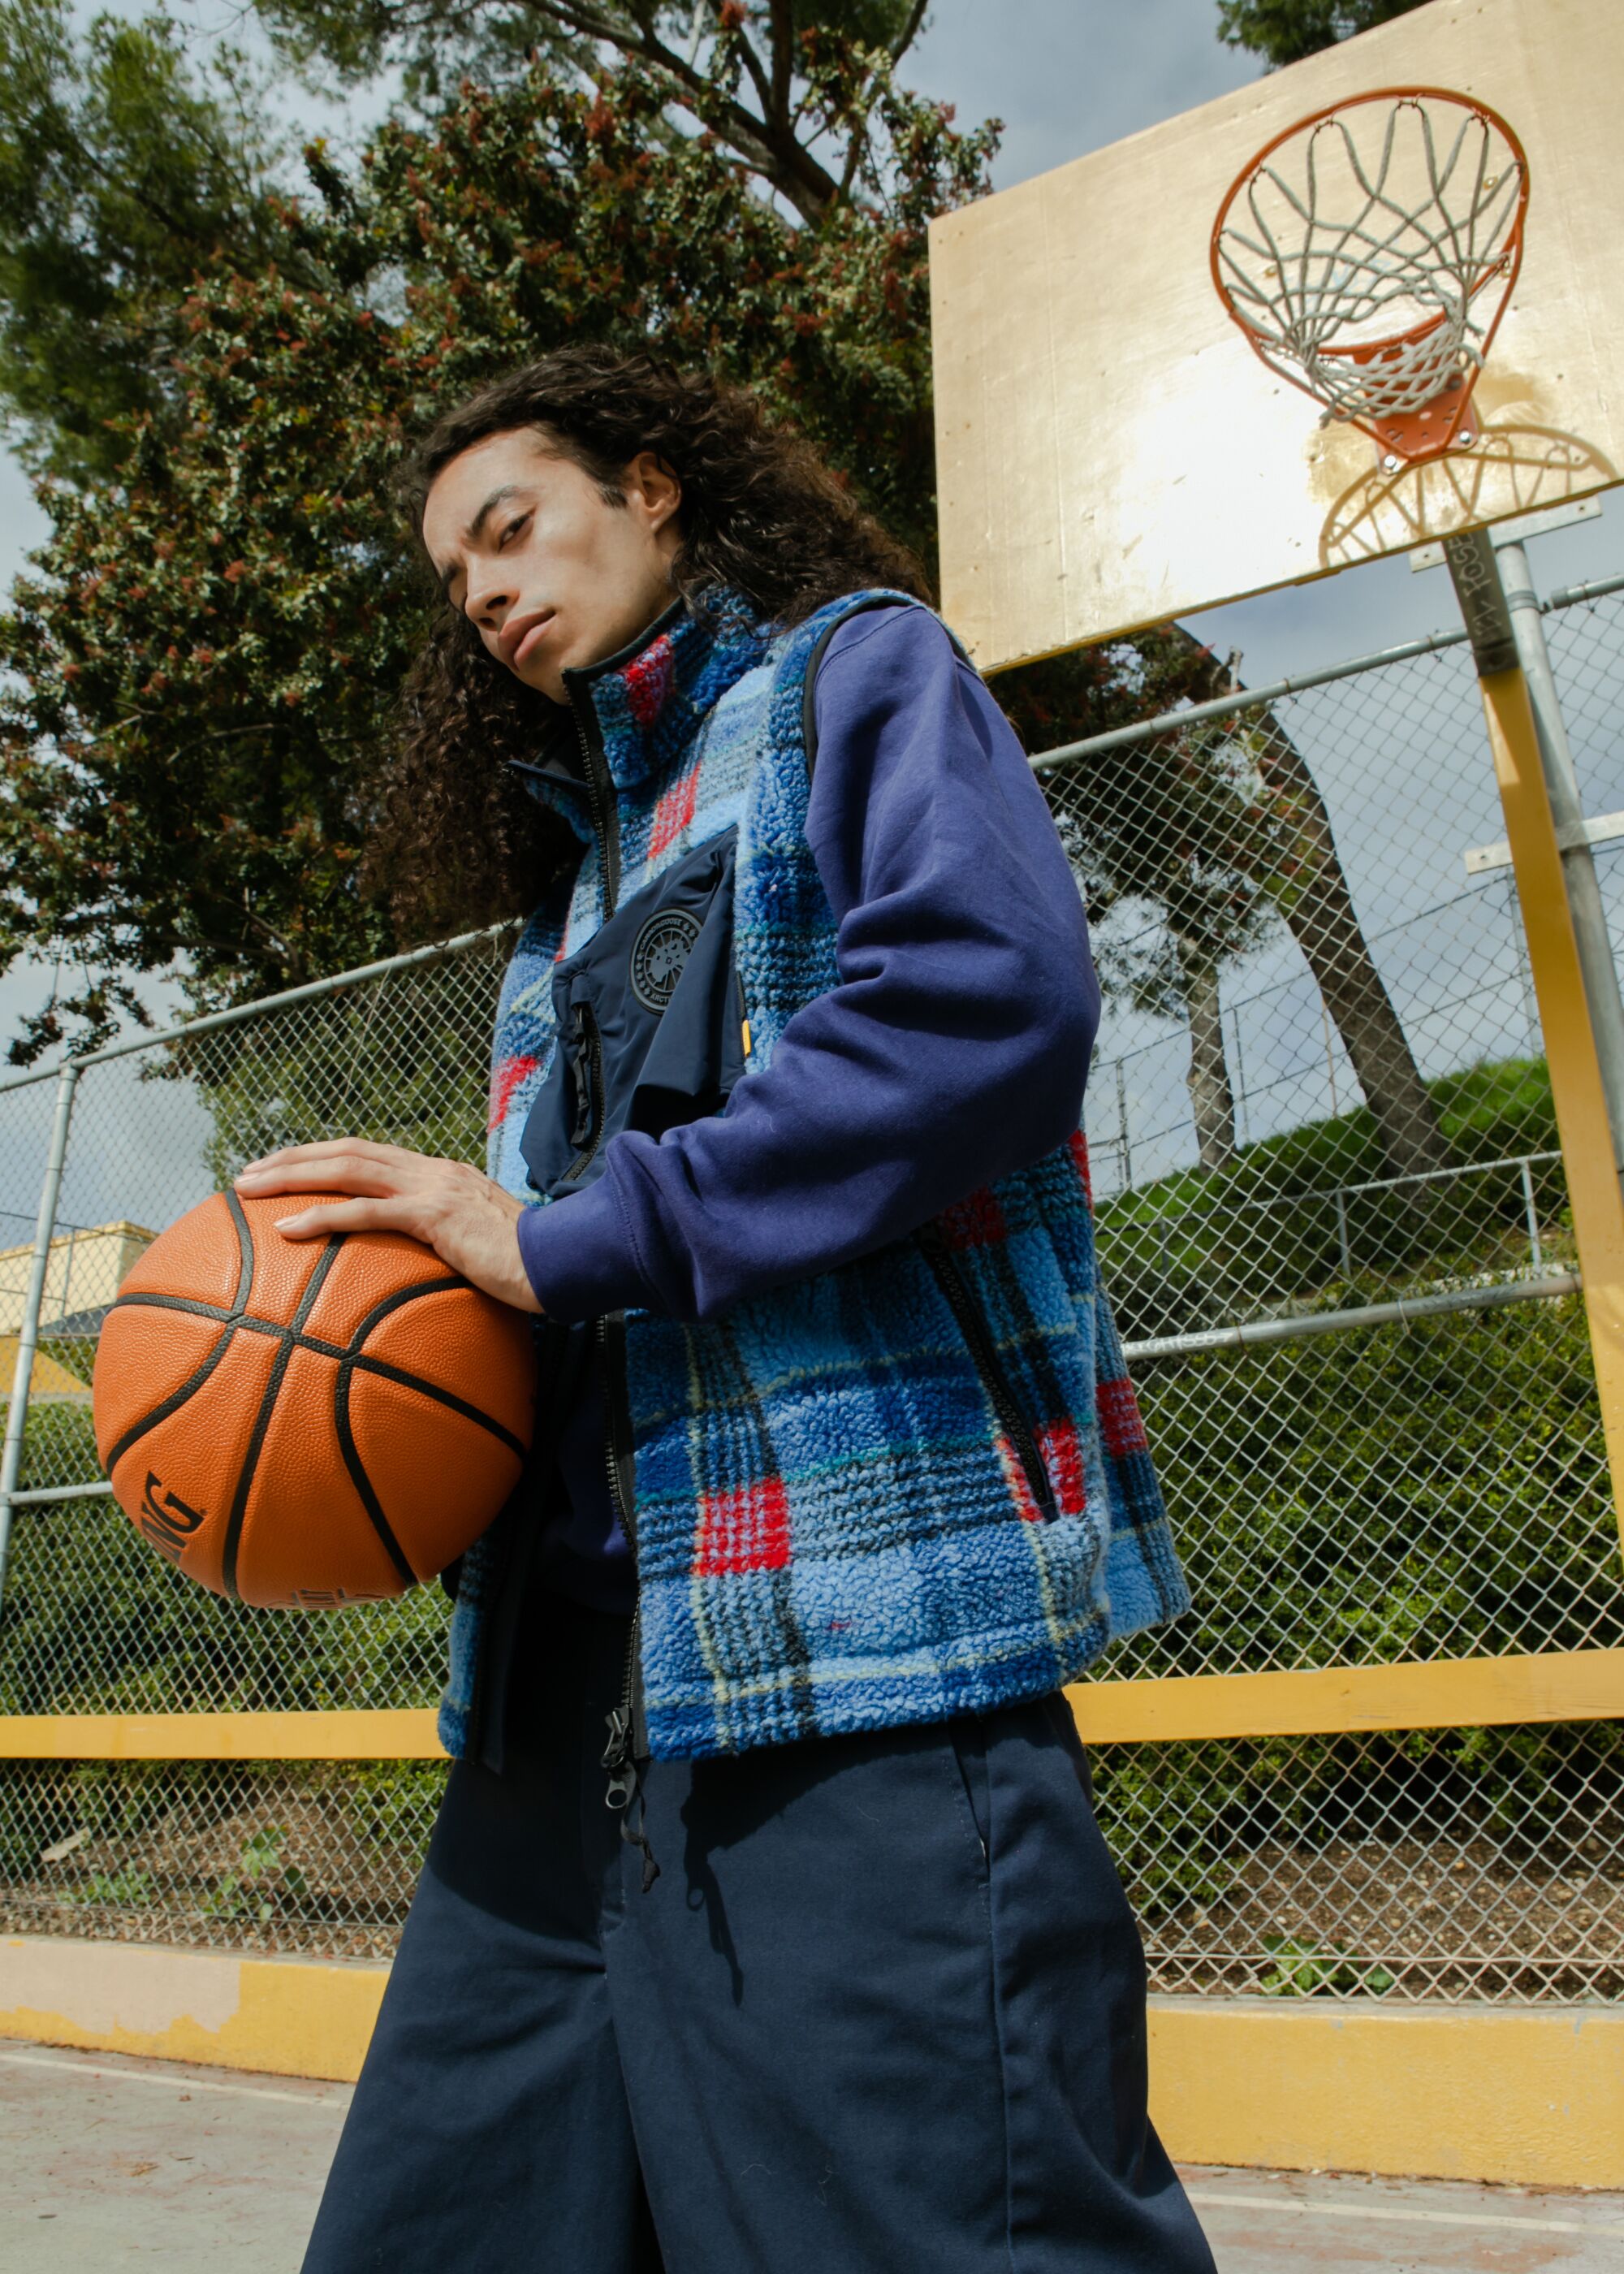 A model wearing a blue tartan vest palms a basketball.